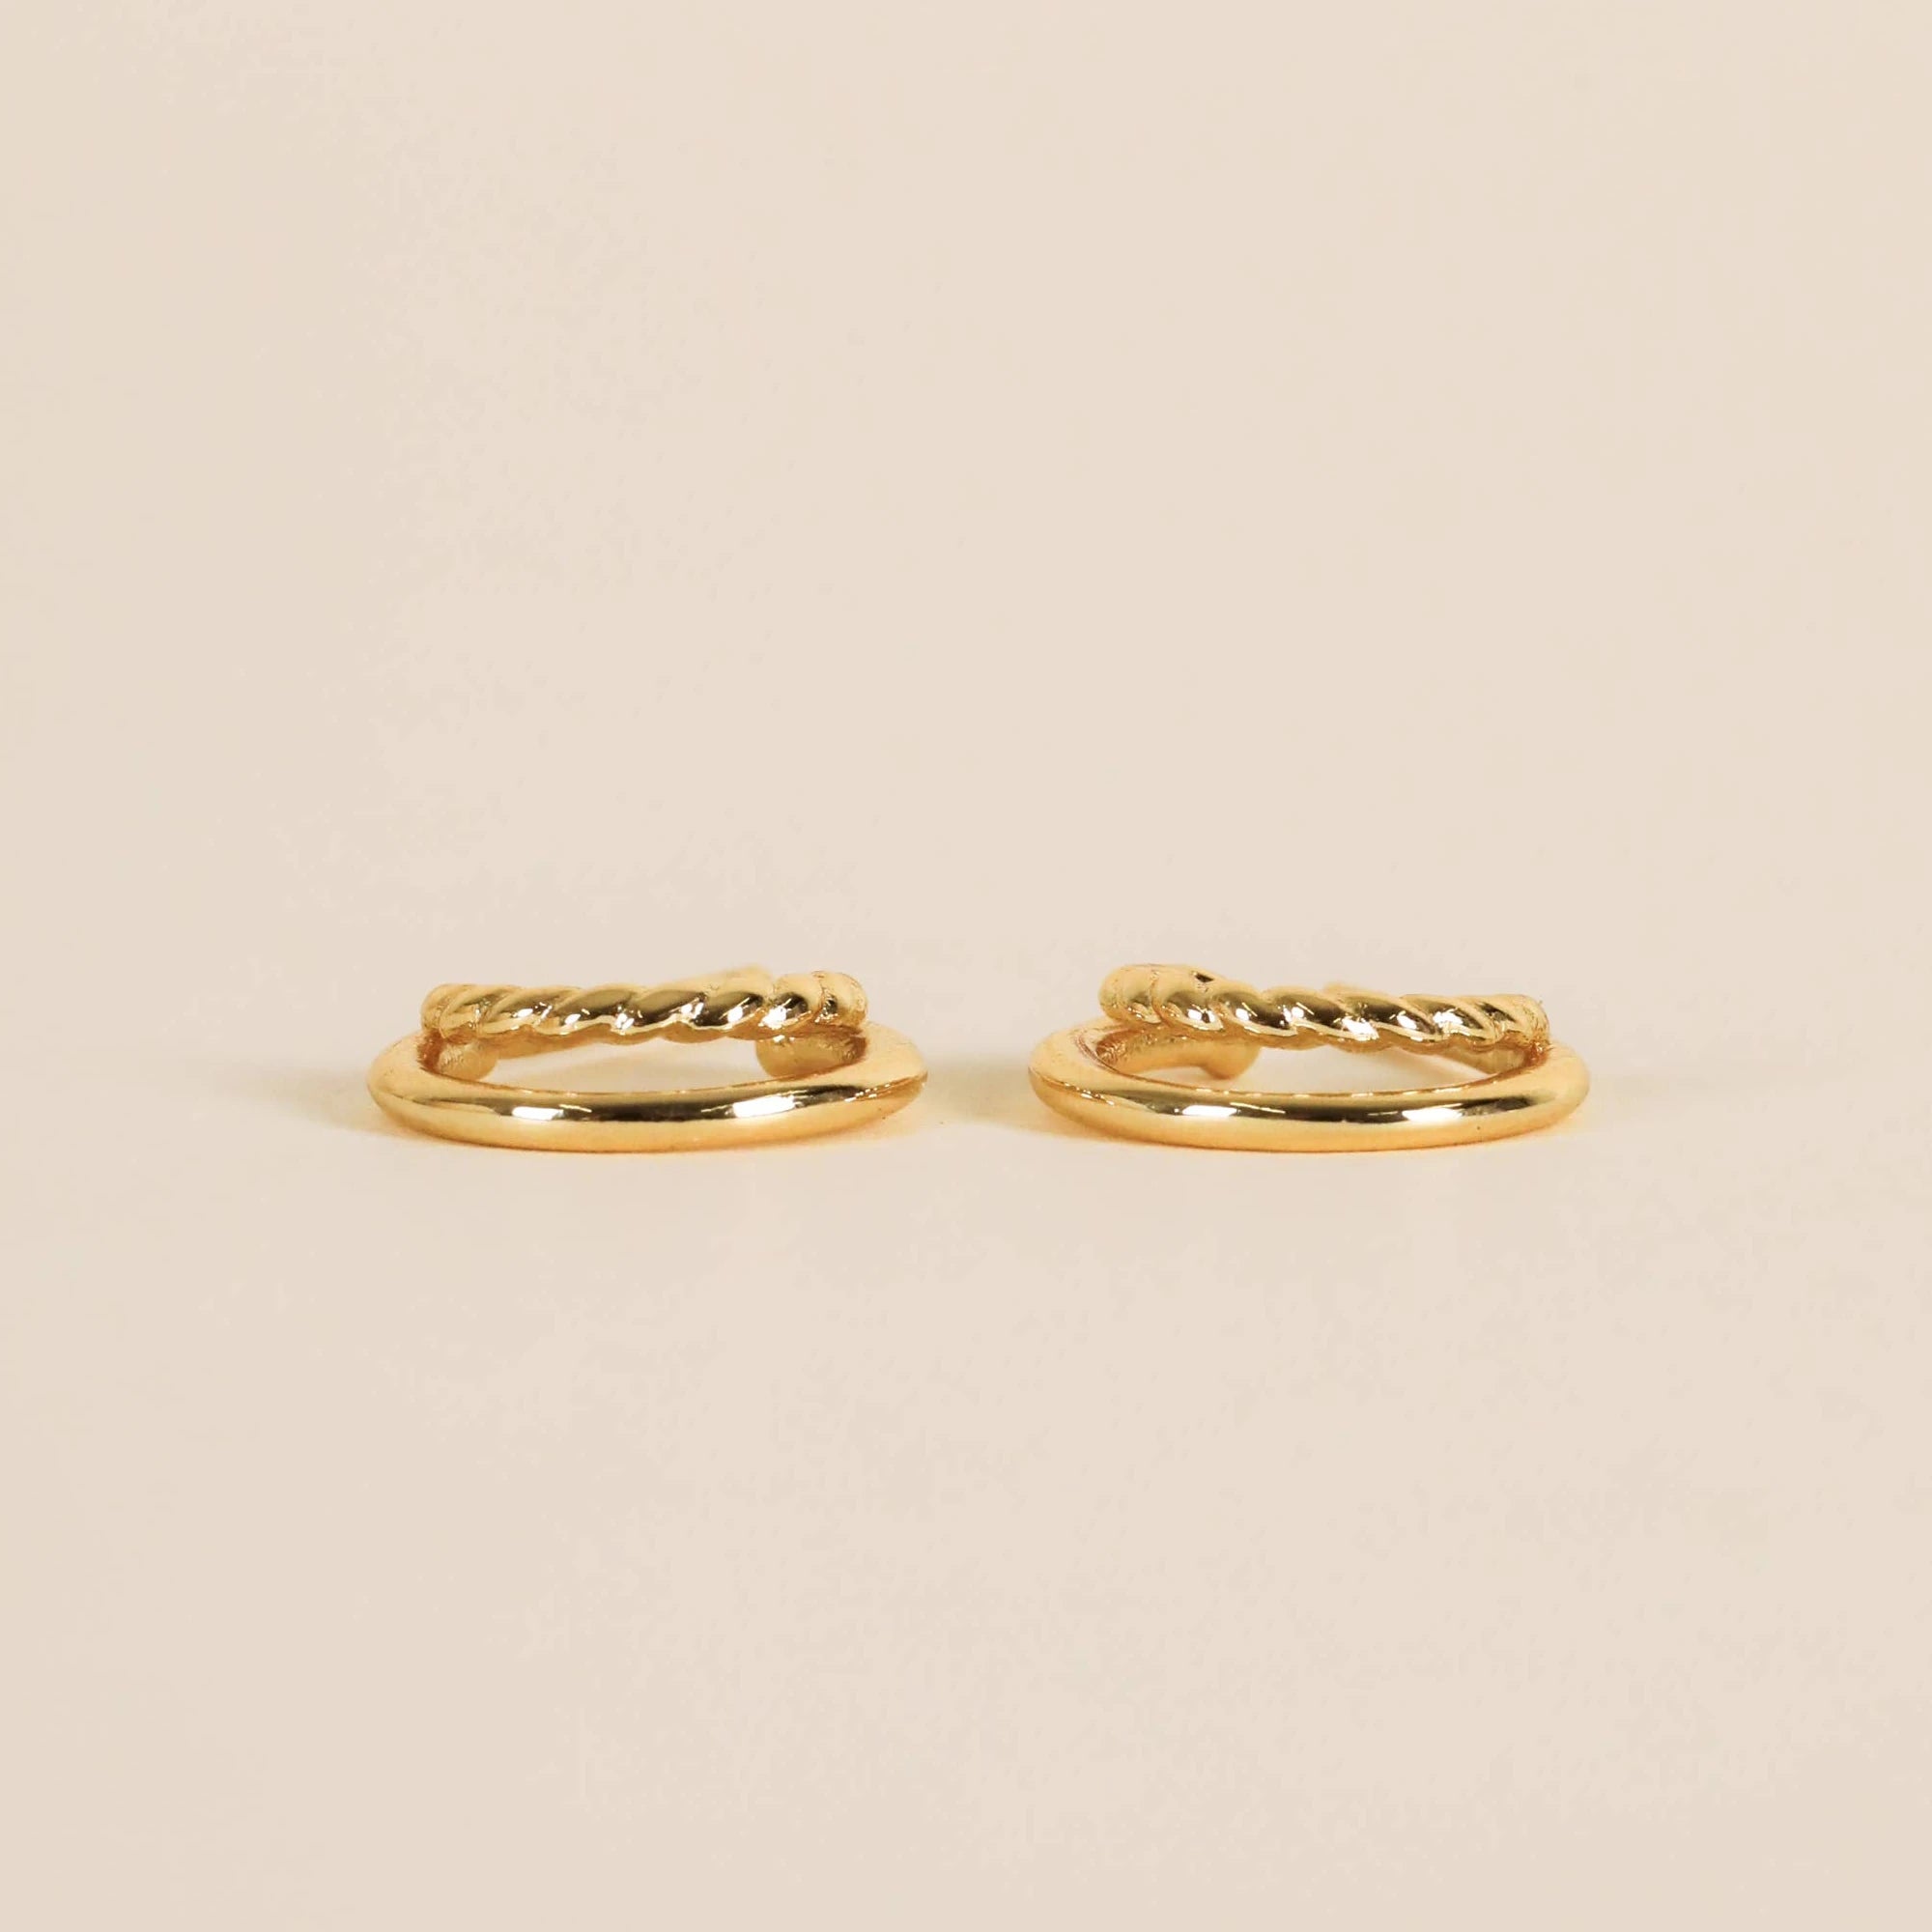 Side view of gold double hoop earrings.